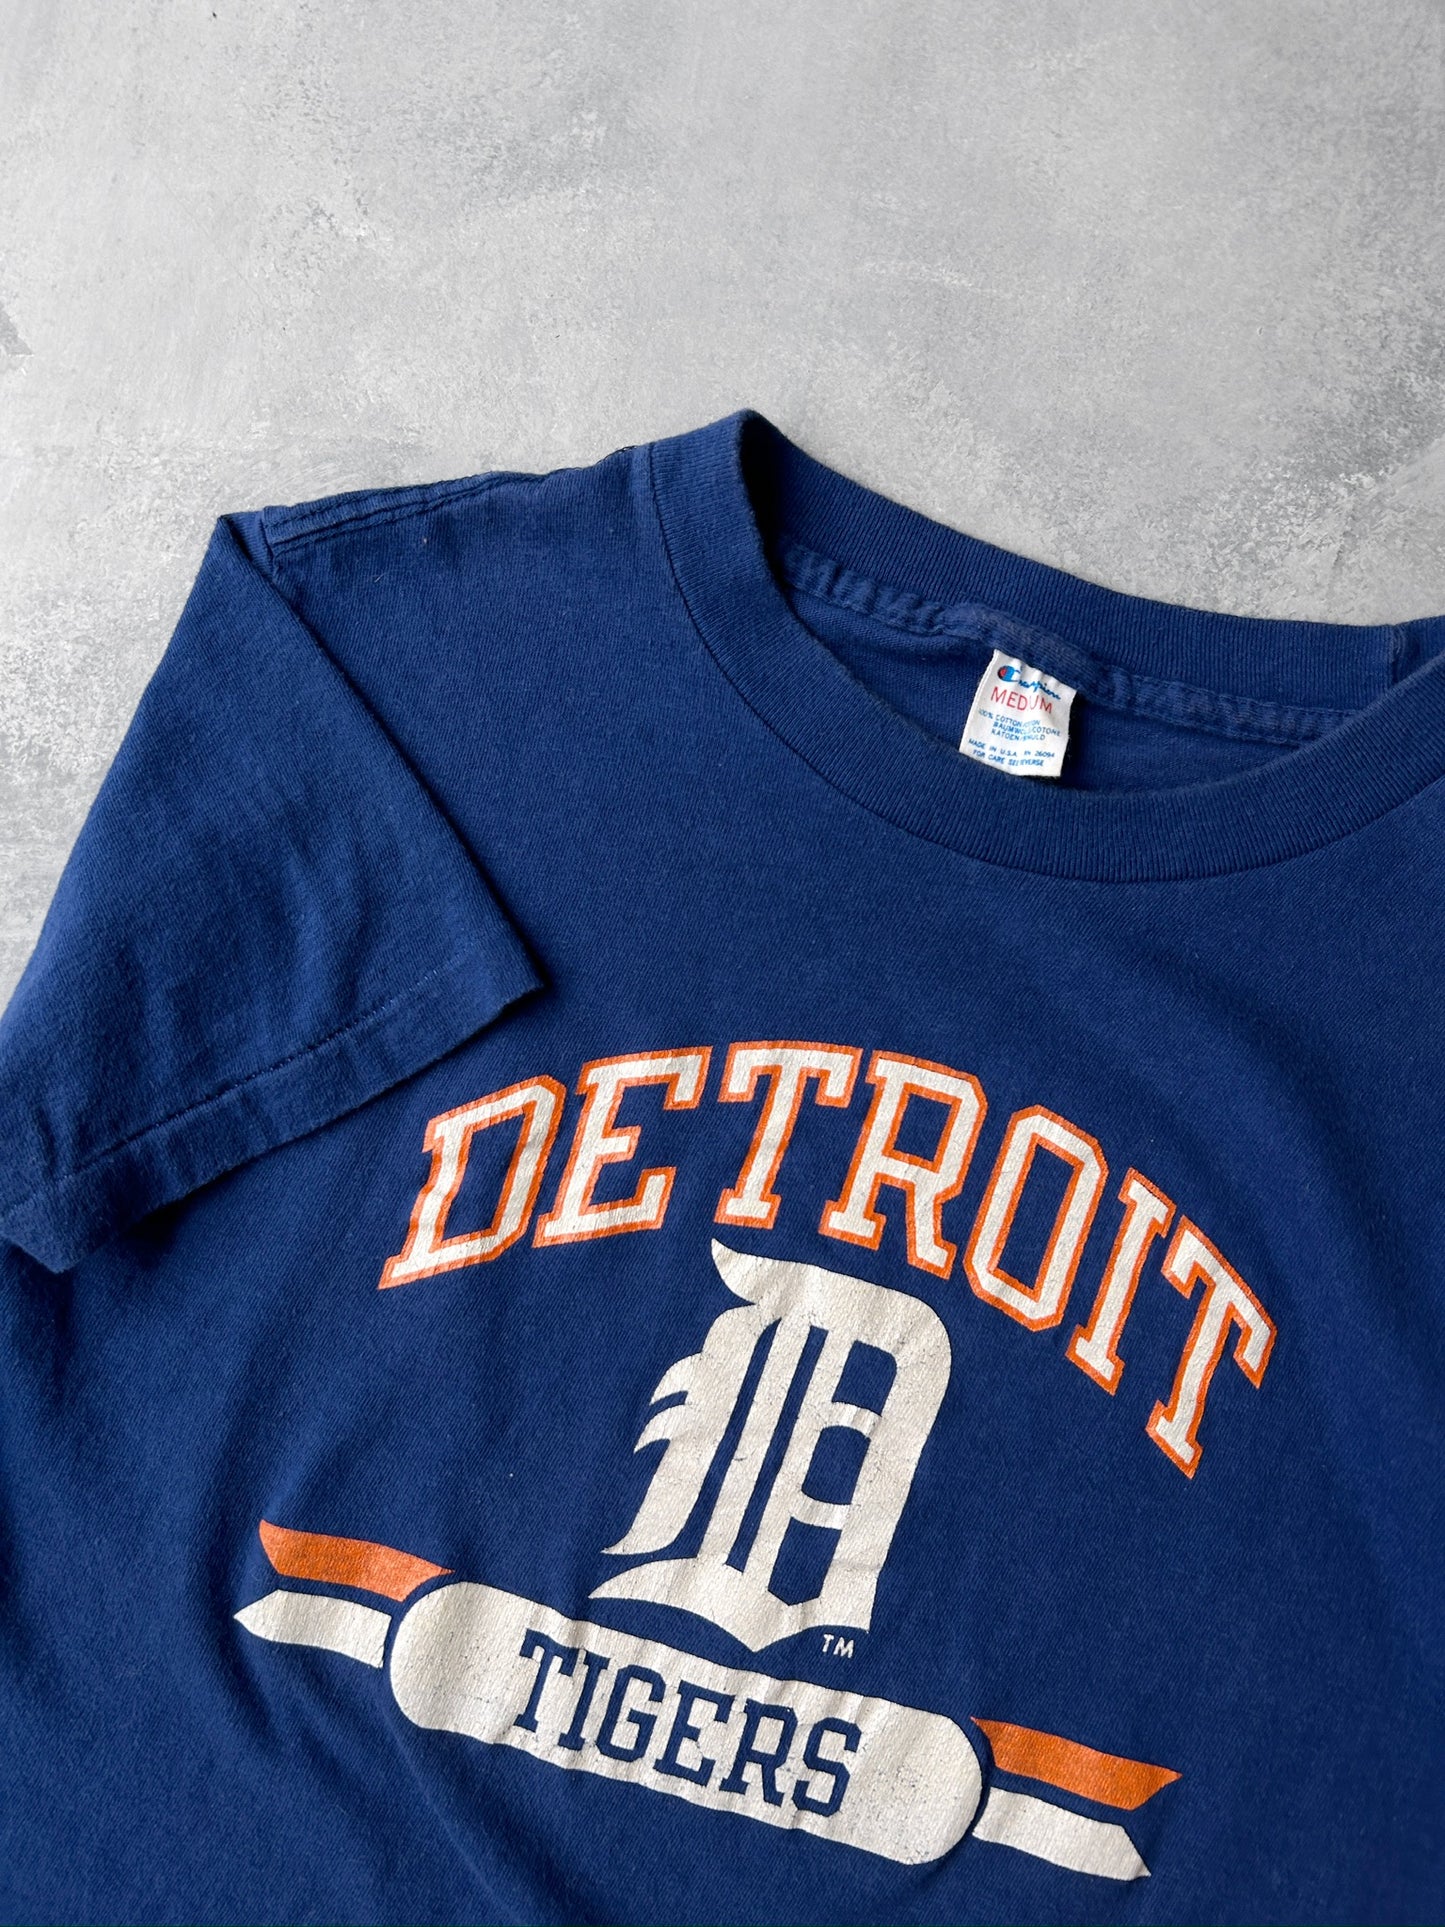 Detroit Tigers T-Shirt 80's - Small